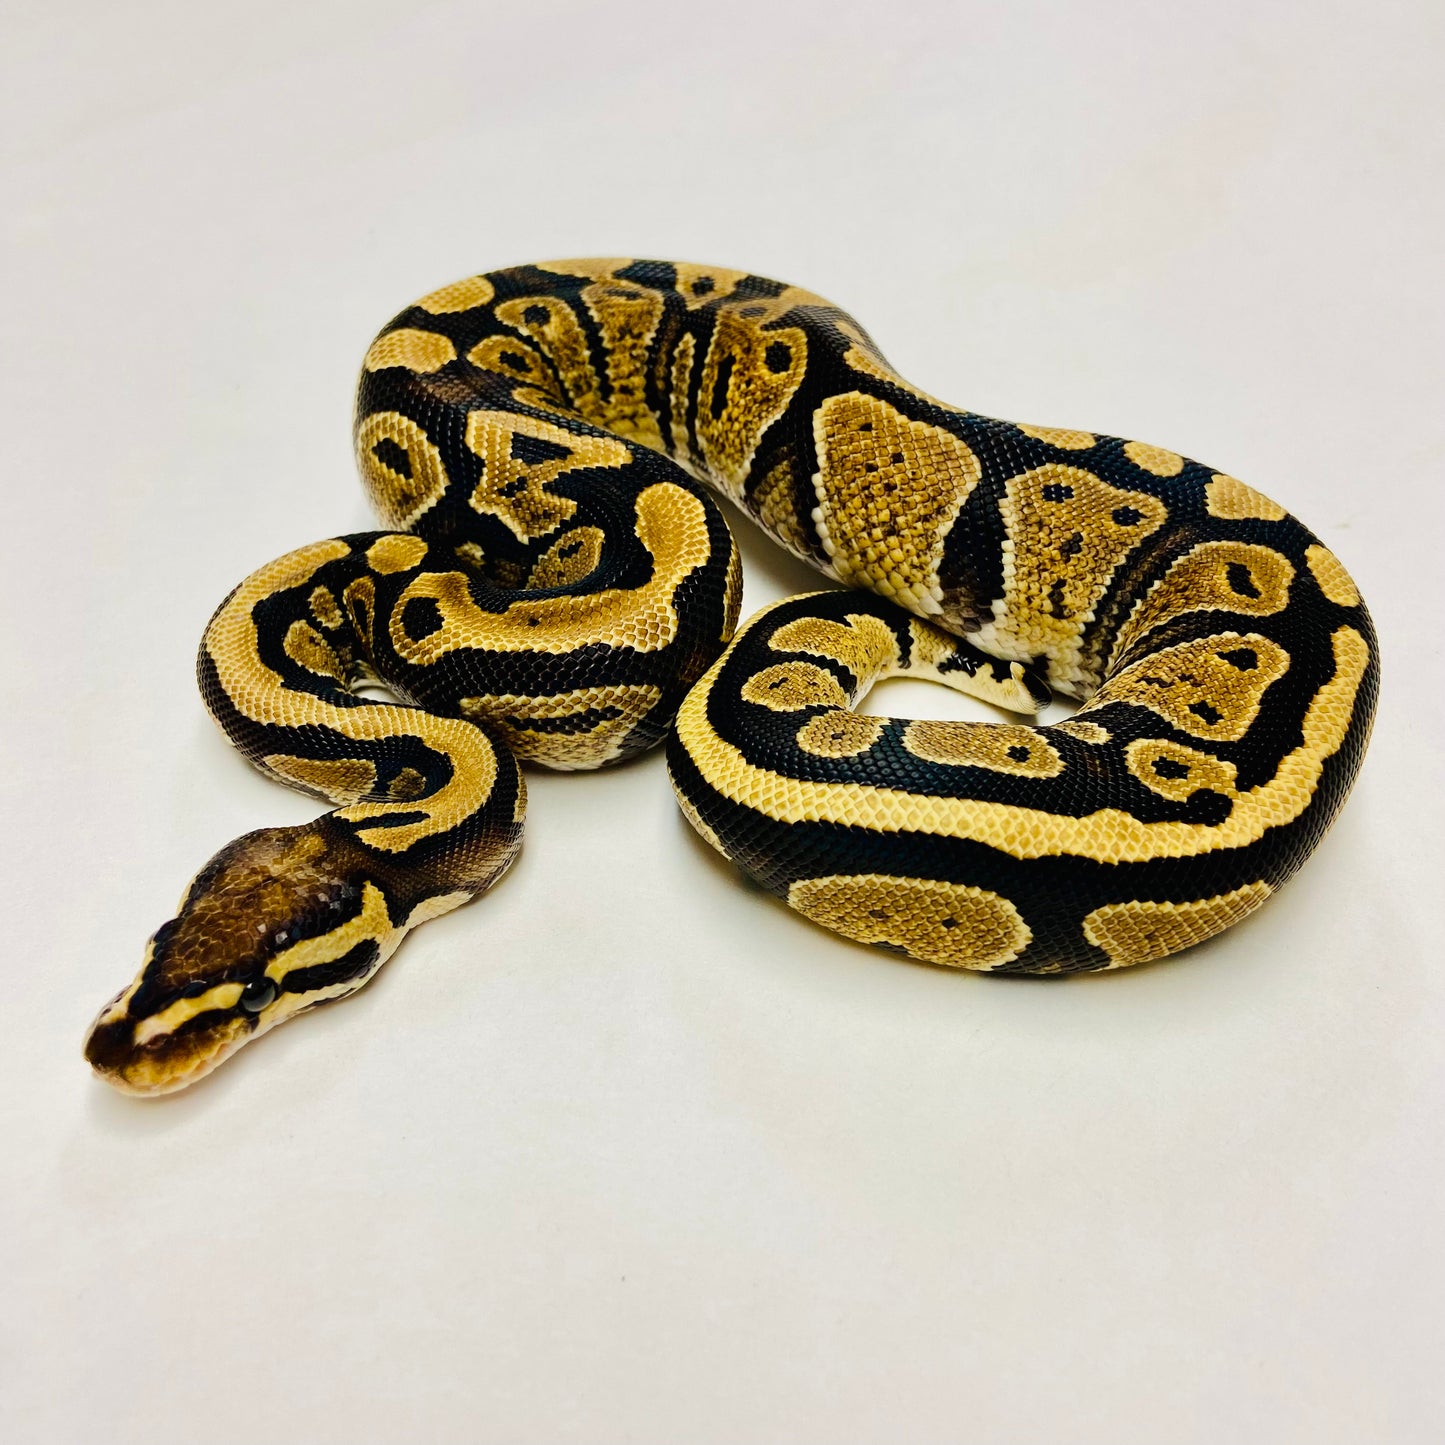 YellowBelly Ball Python Female- #2023F04